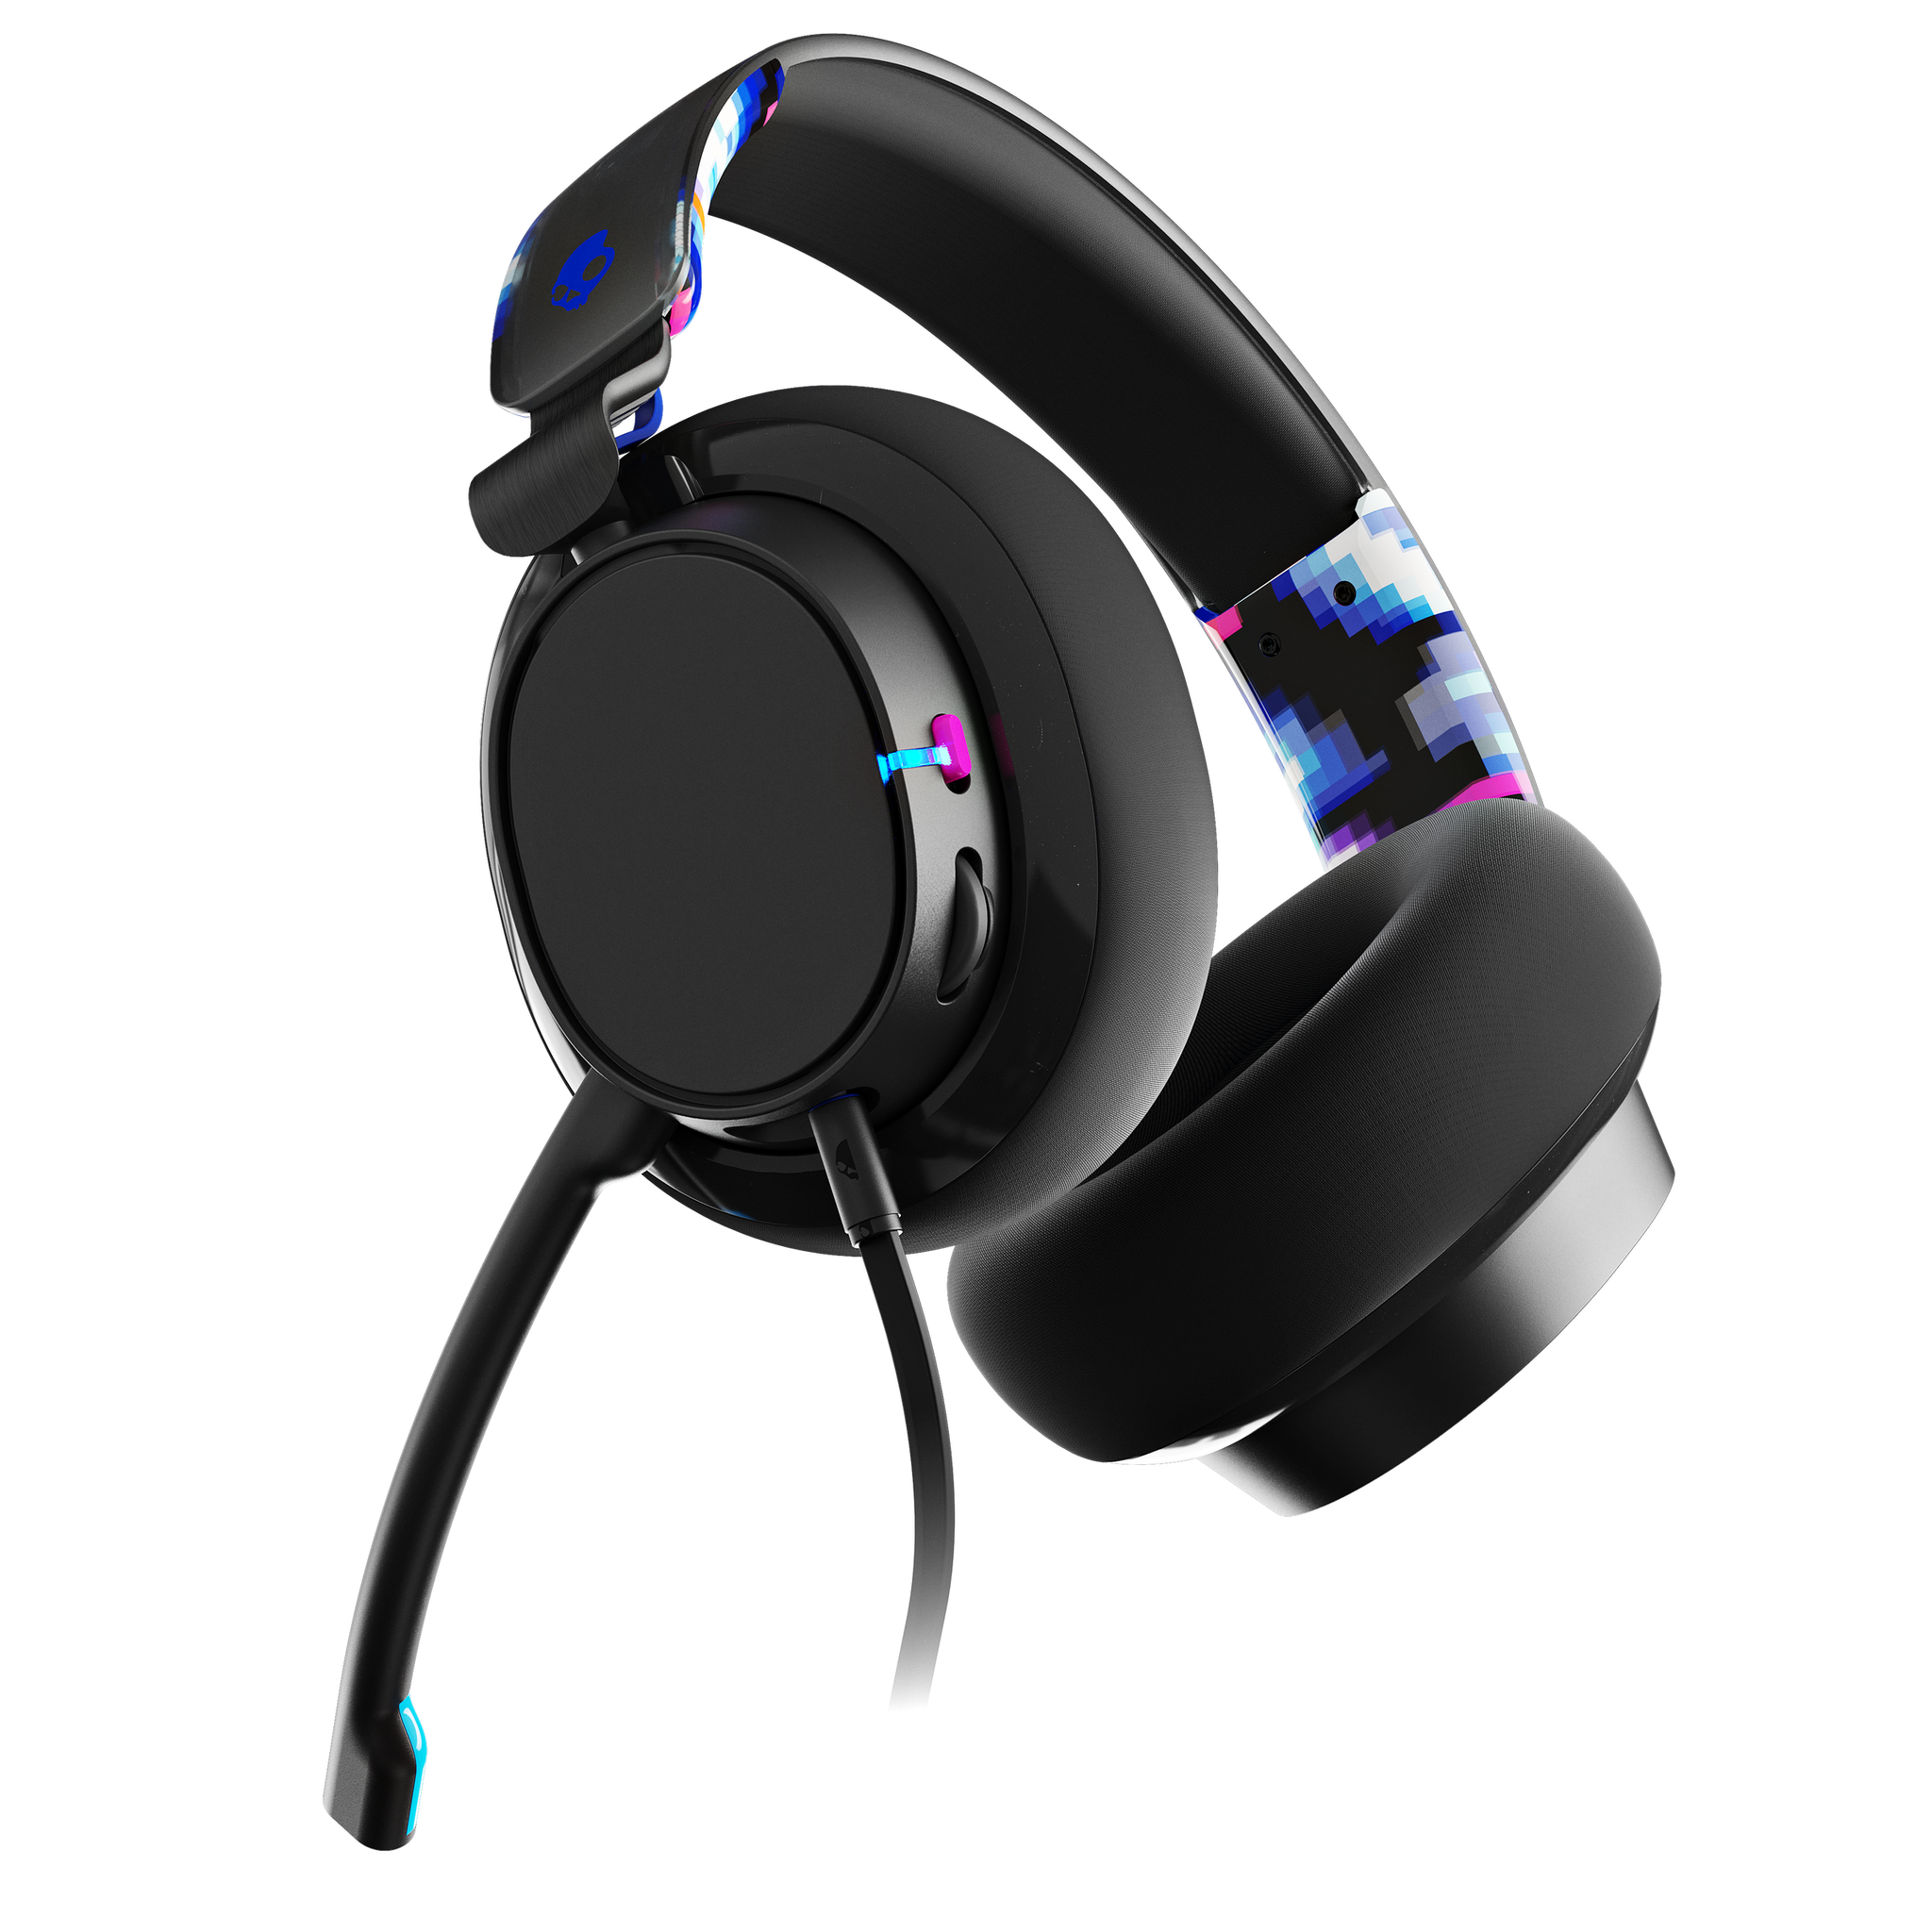 SLYR® Pro Multi-Platform Wired Gaming Headset